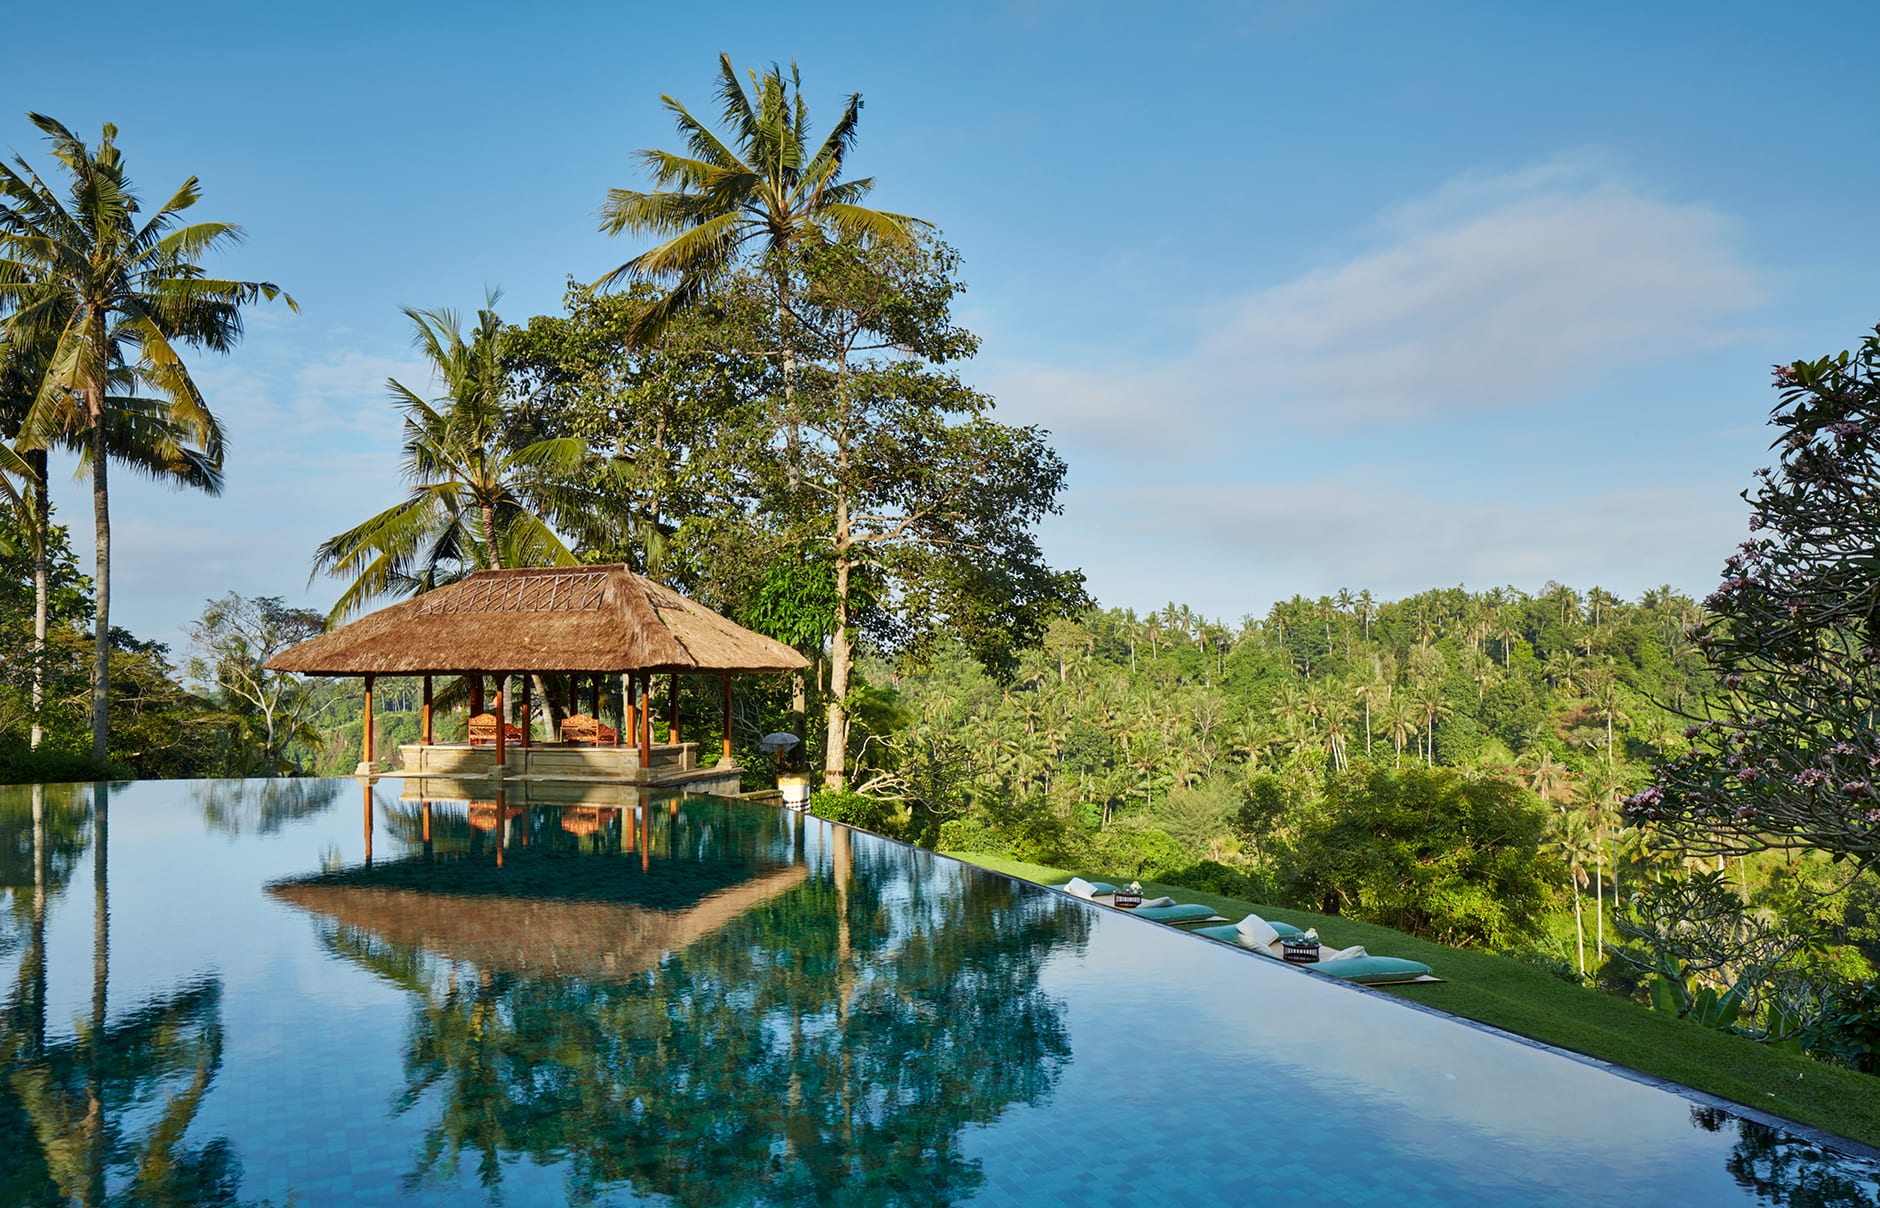 Amandari Ubud, Bali, Indonesia • Luxury Hotel Review by TravelPlusStyle